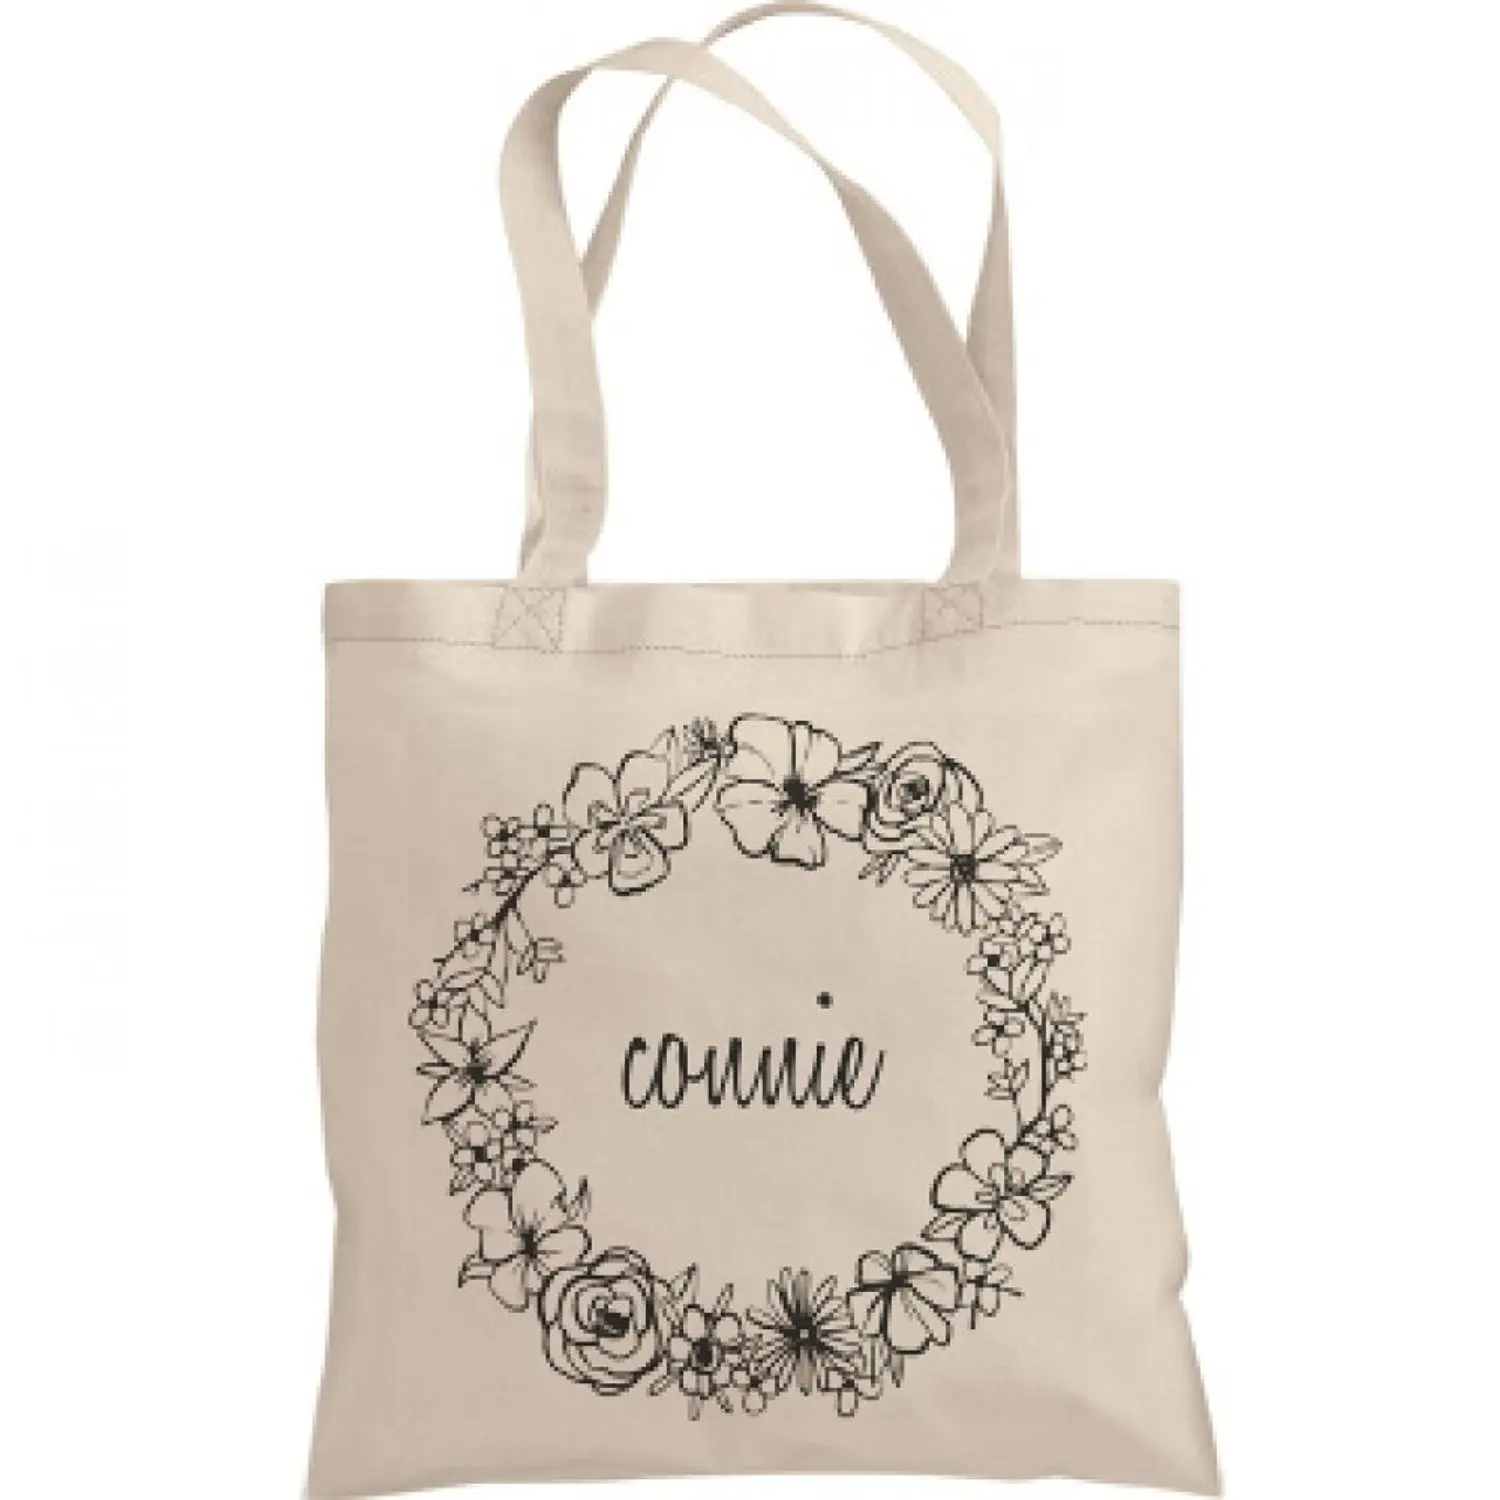 Buy Cute Floral Chloe Tote Bag: Liberty Bags Canvas Bargain Tote Bag in Cheap Price on comicsahoy.com